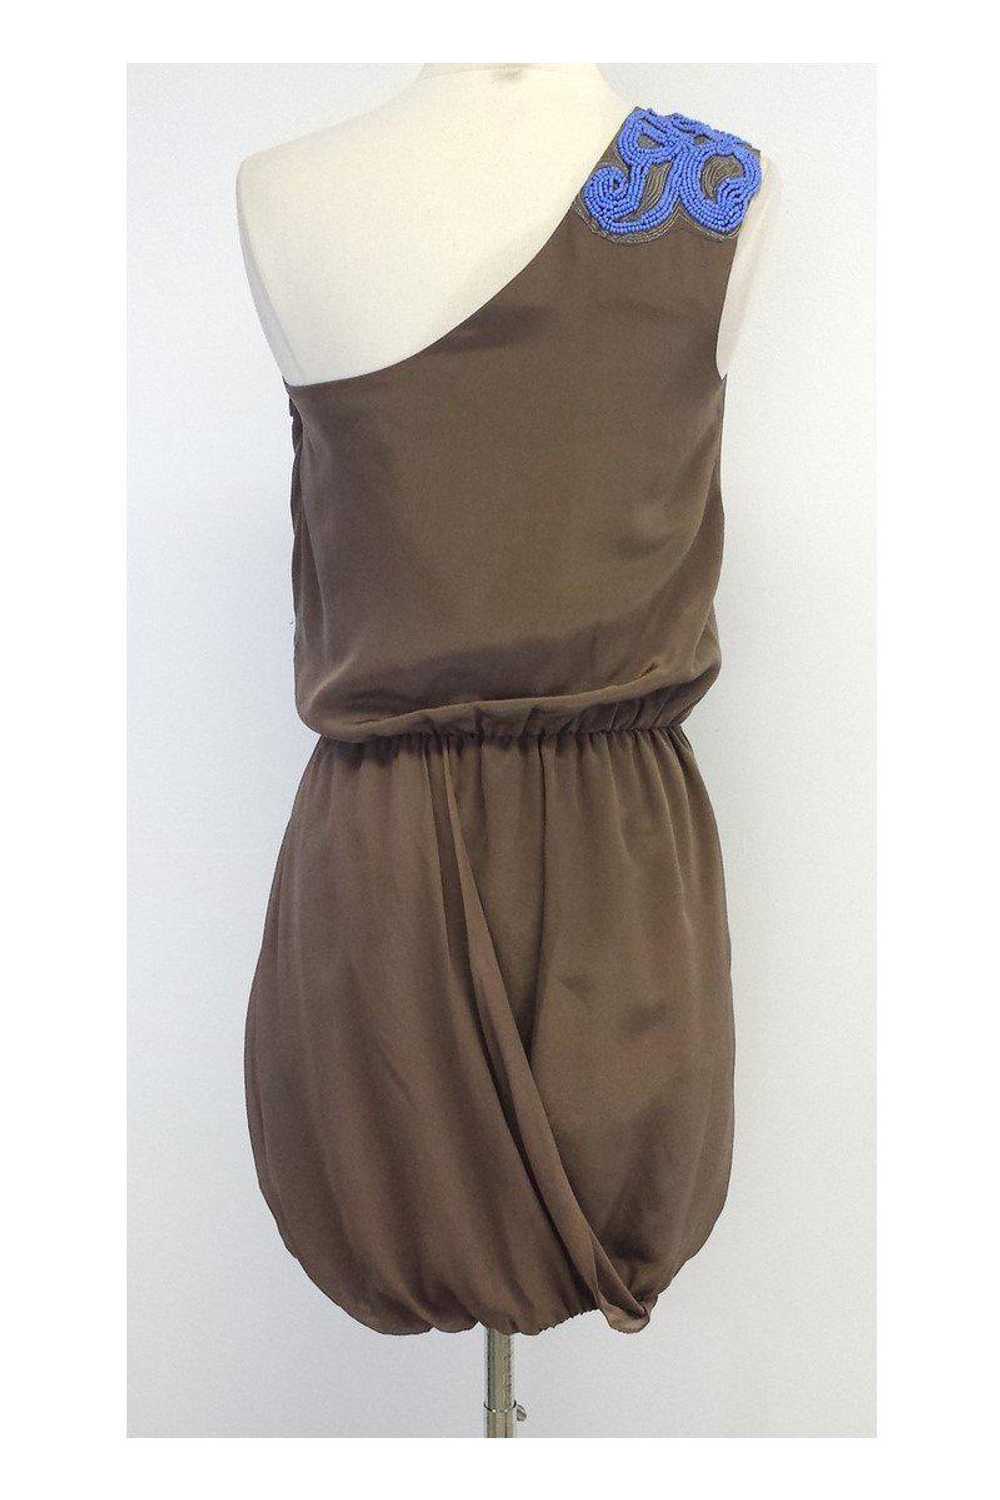 Tibi - Taupe Silk Beaded One Shoulder Dress Sz S - image 3